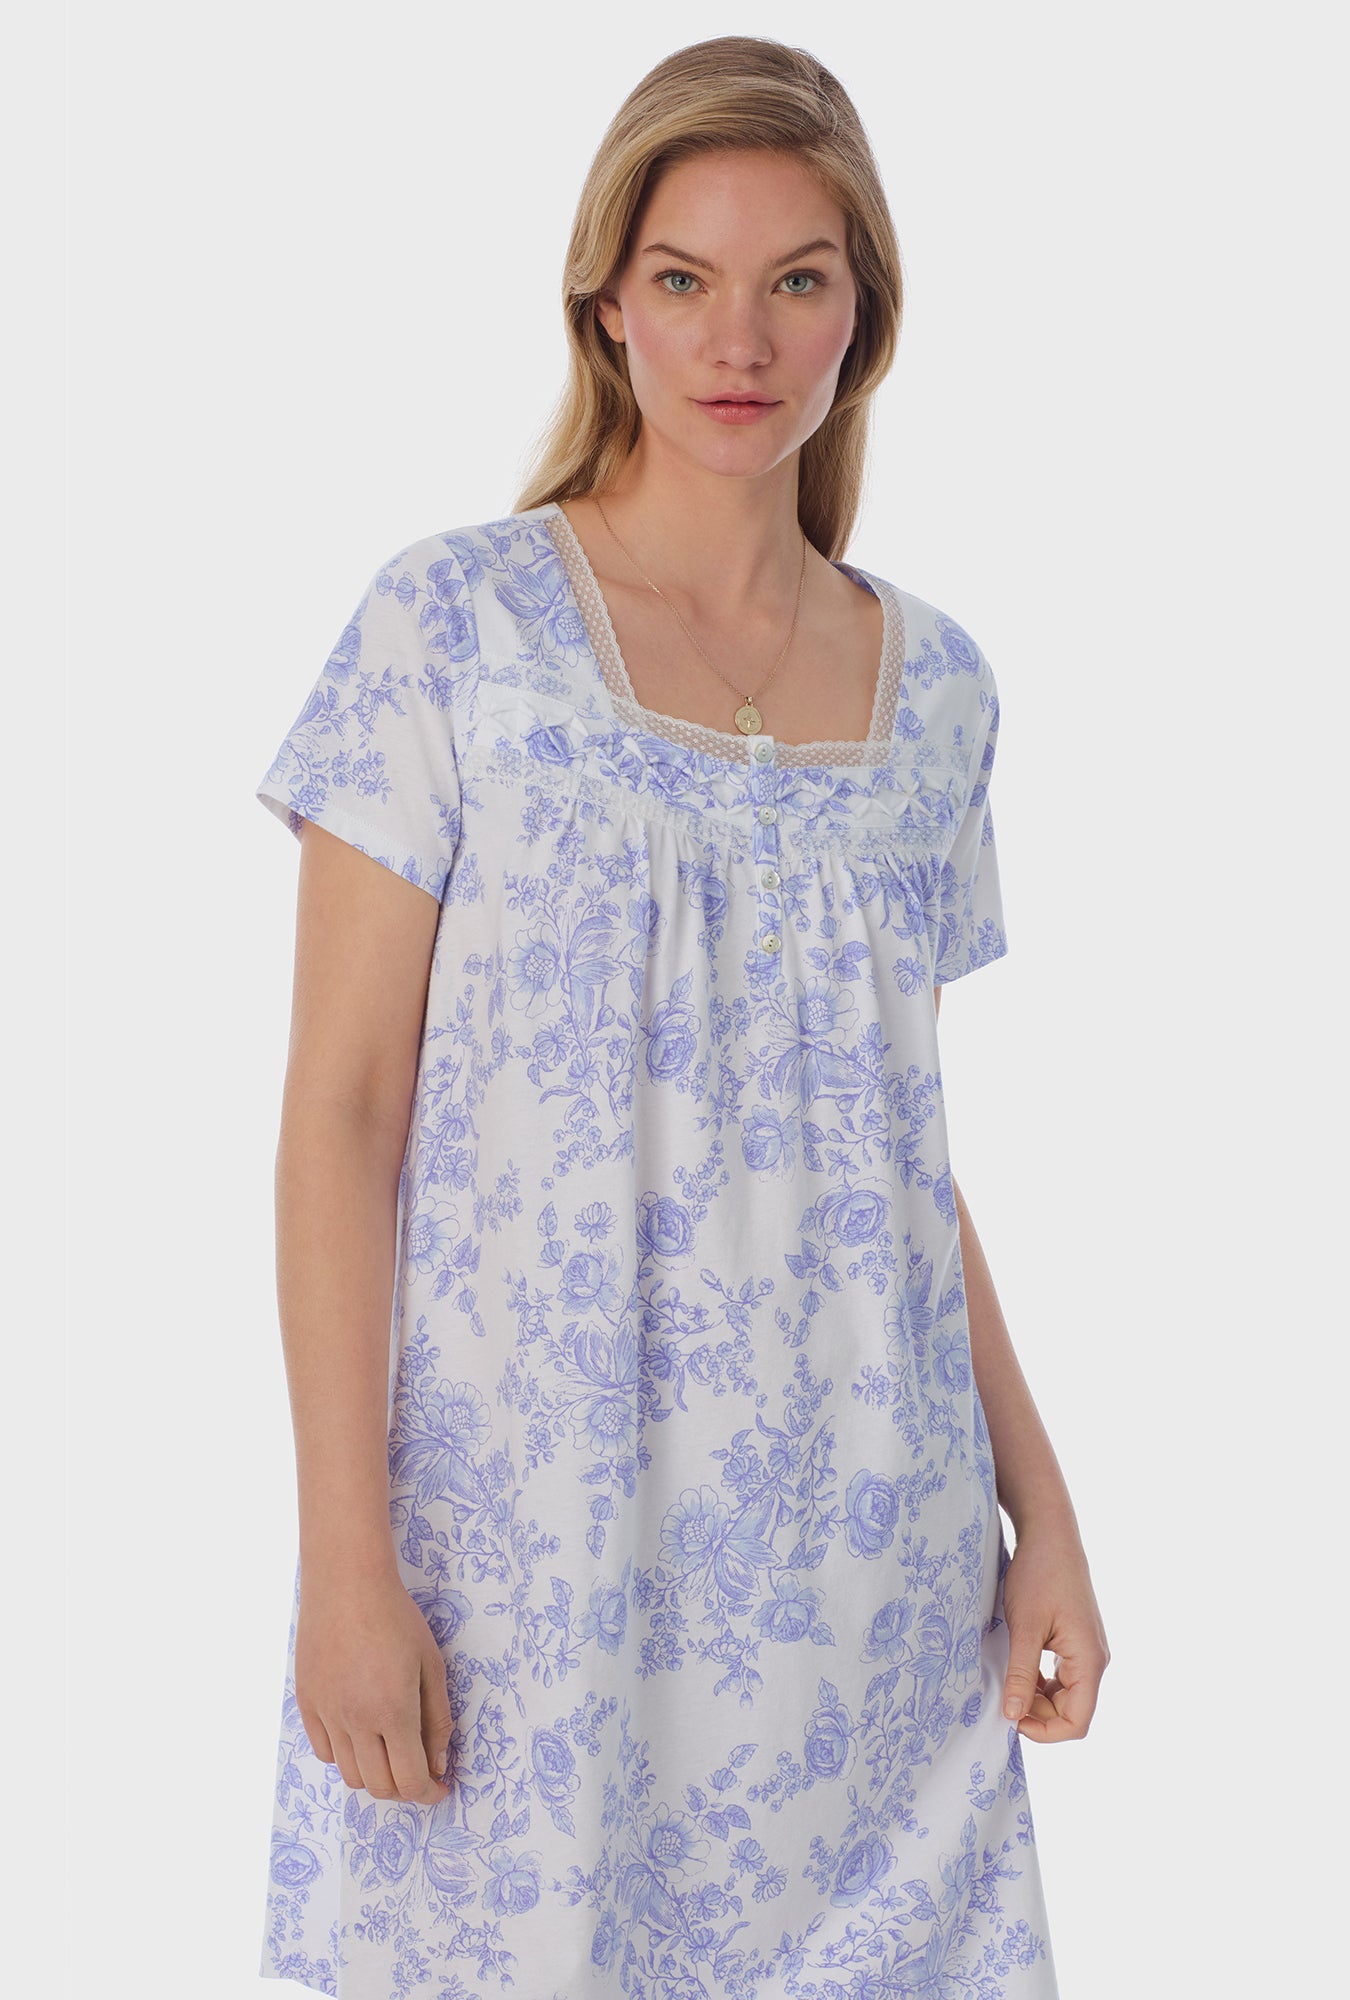 Vintage Rose Cotton Short Nightgown